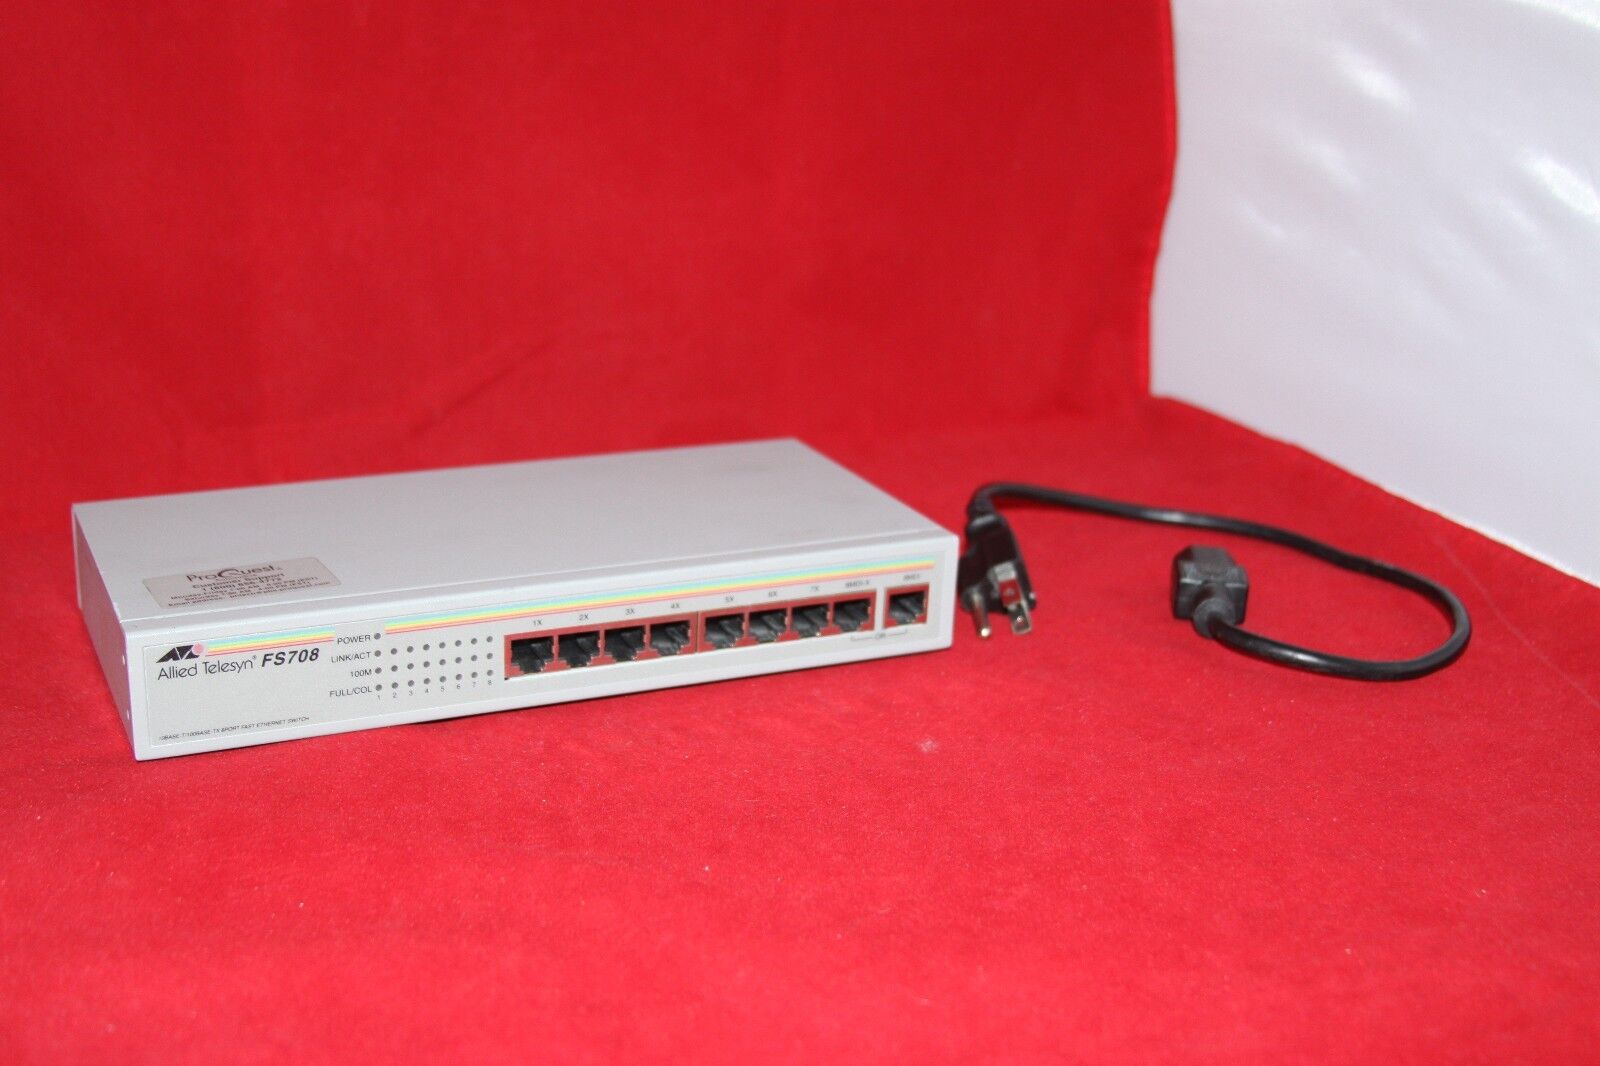 8-Port Ethernet Switch, 10 Base-T/100 Base-TX, Allied Telesyn AT-FS708.